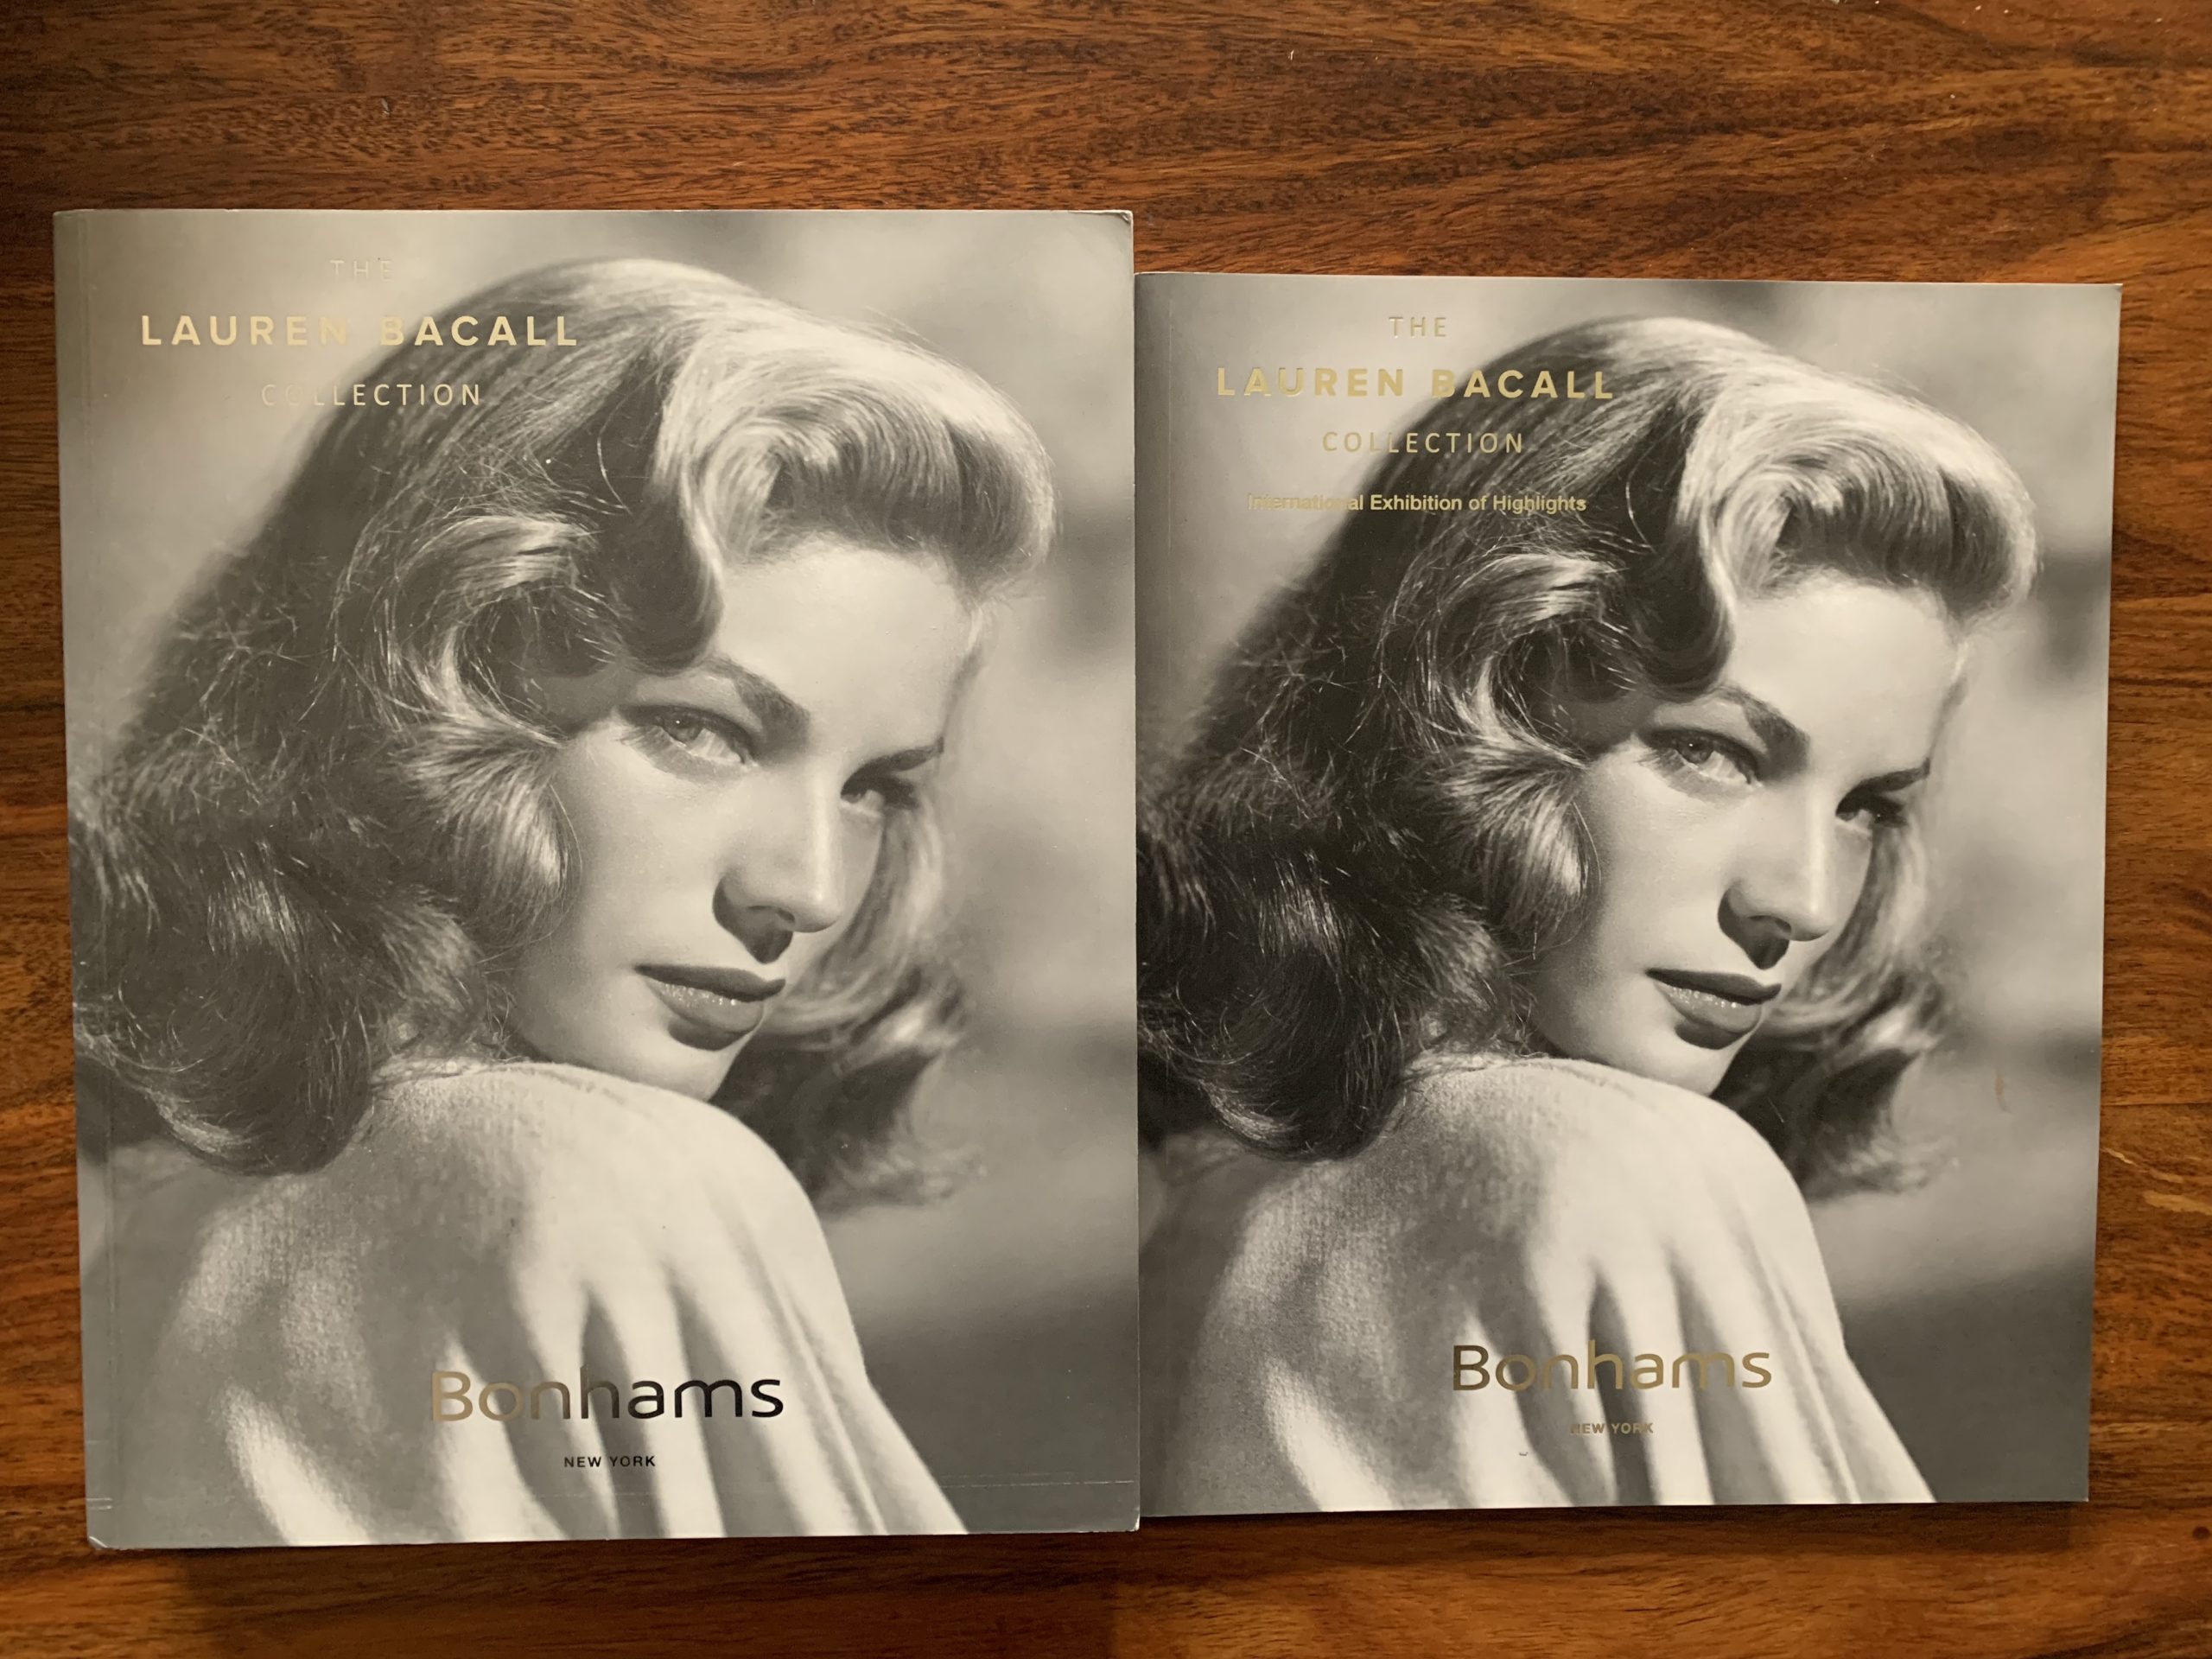 Bonhams. The Lauren Bacall Collection